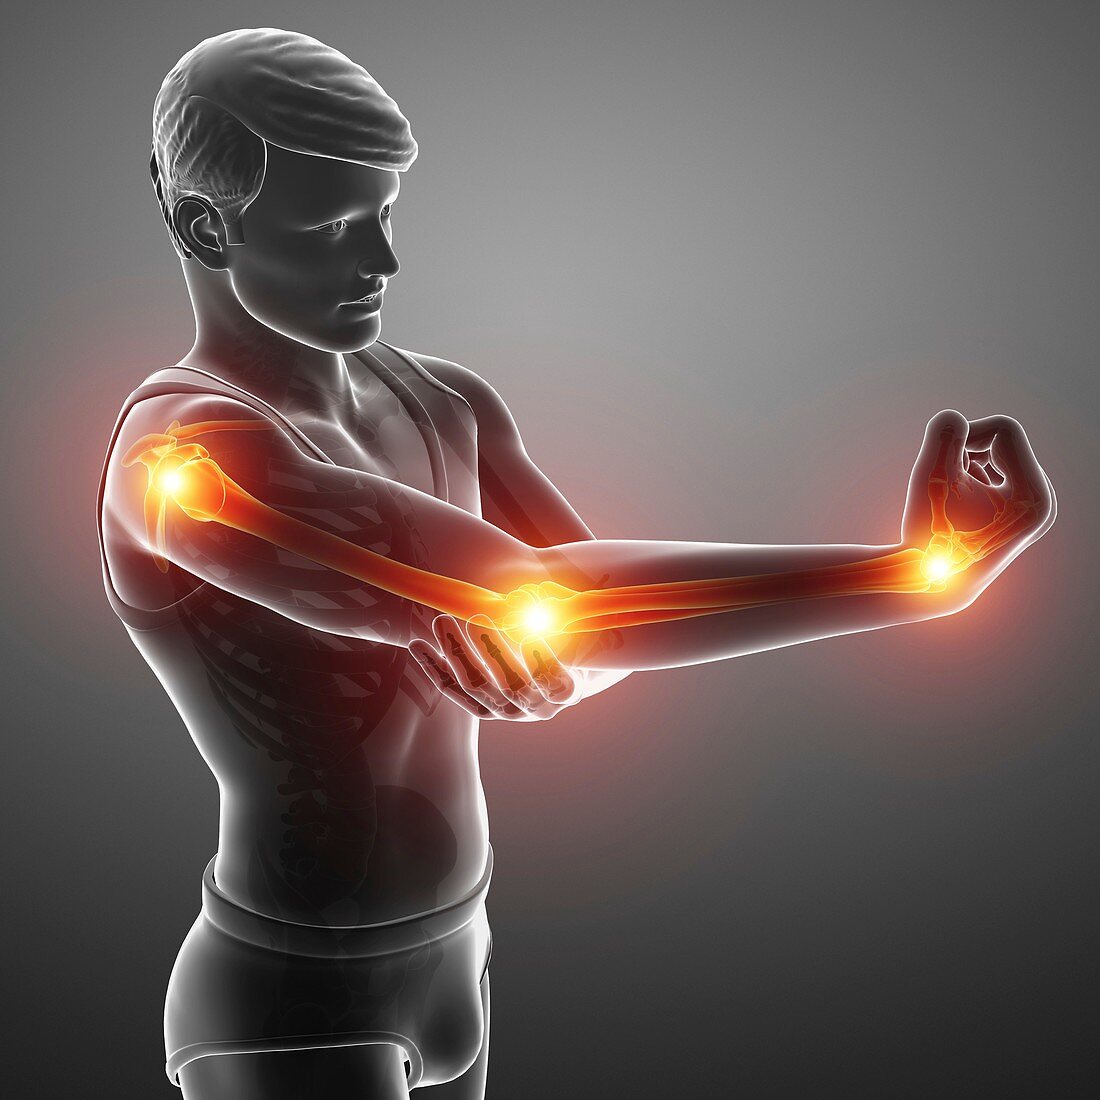 Man with arm pain, illustration